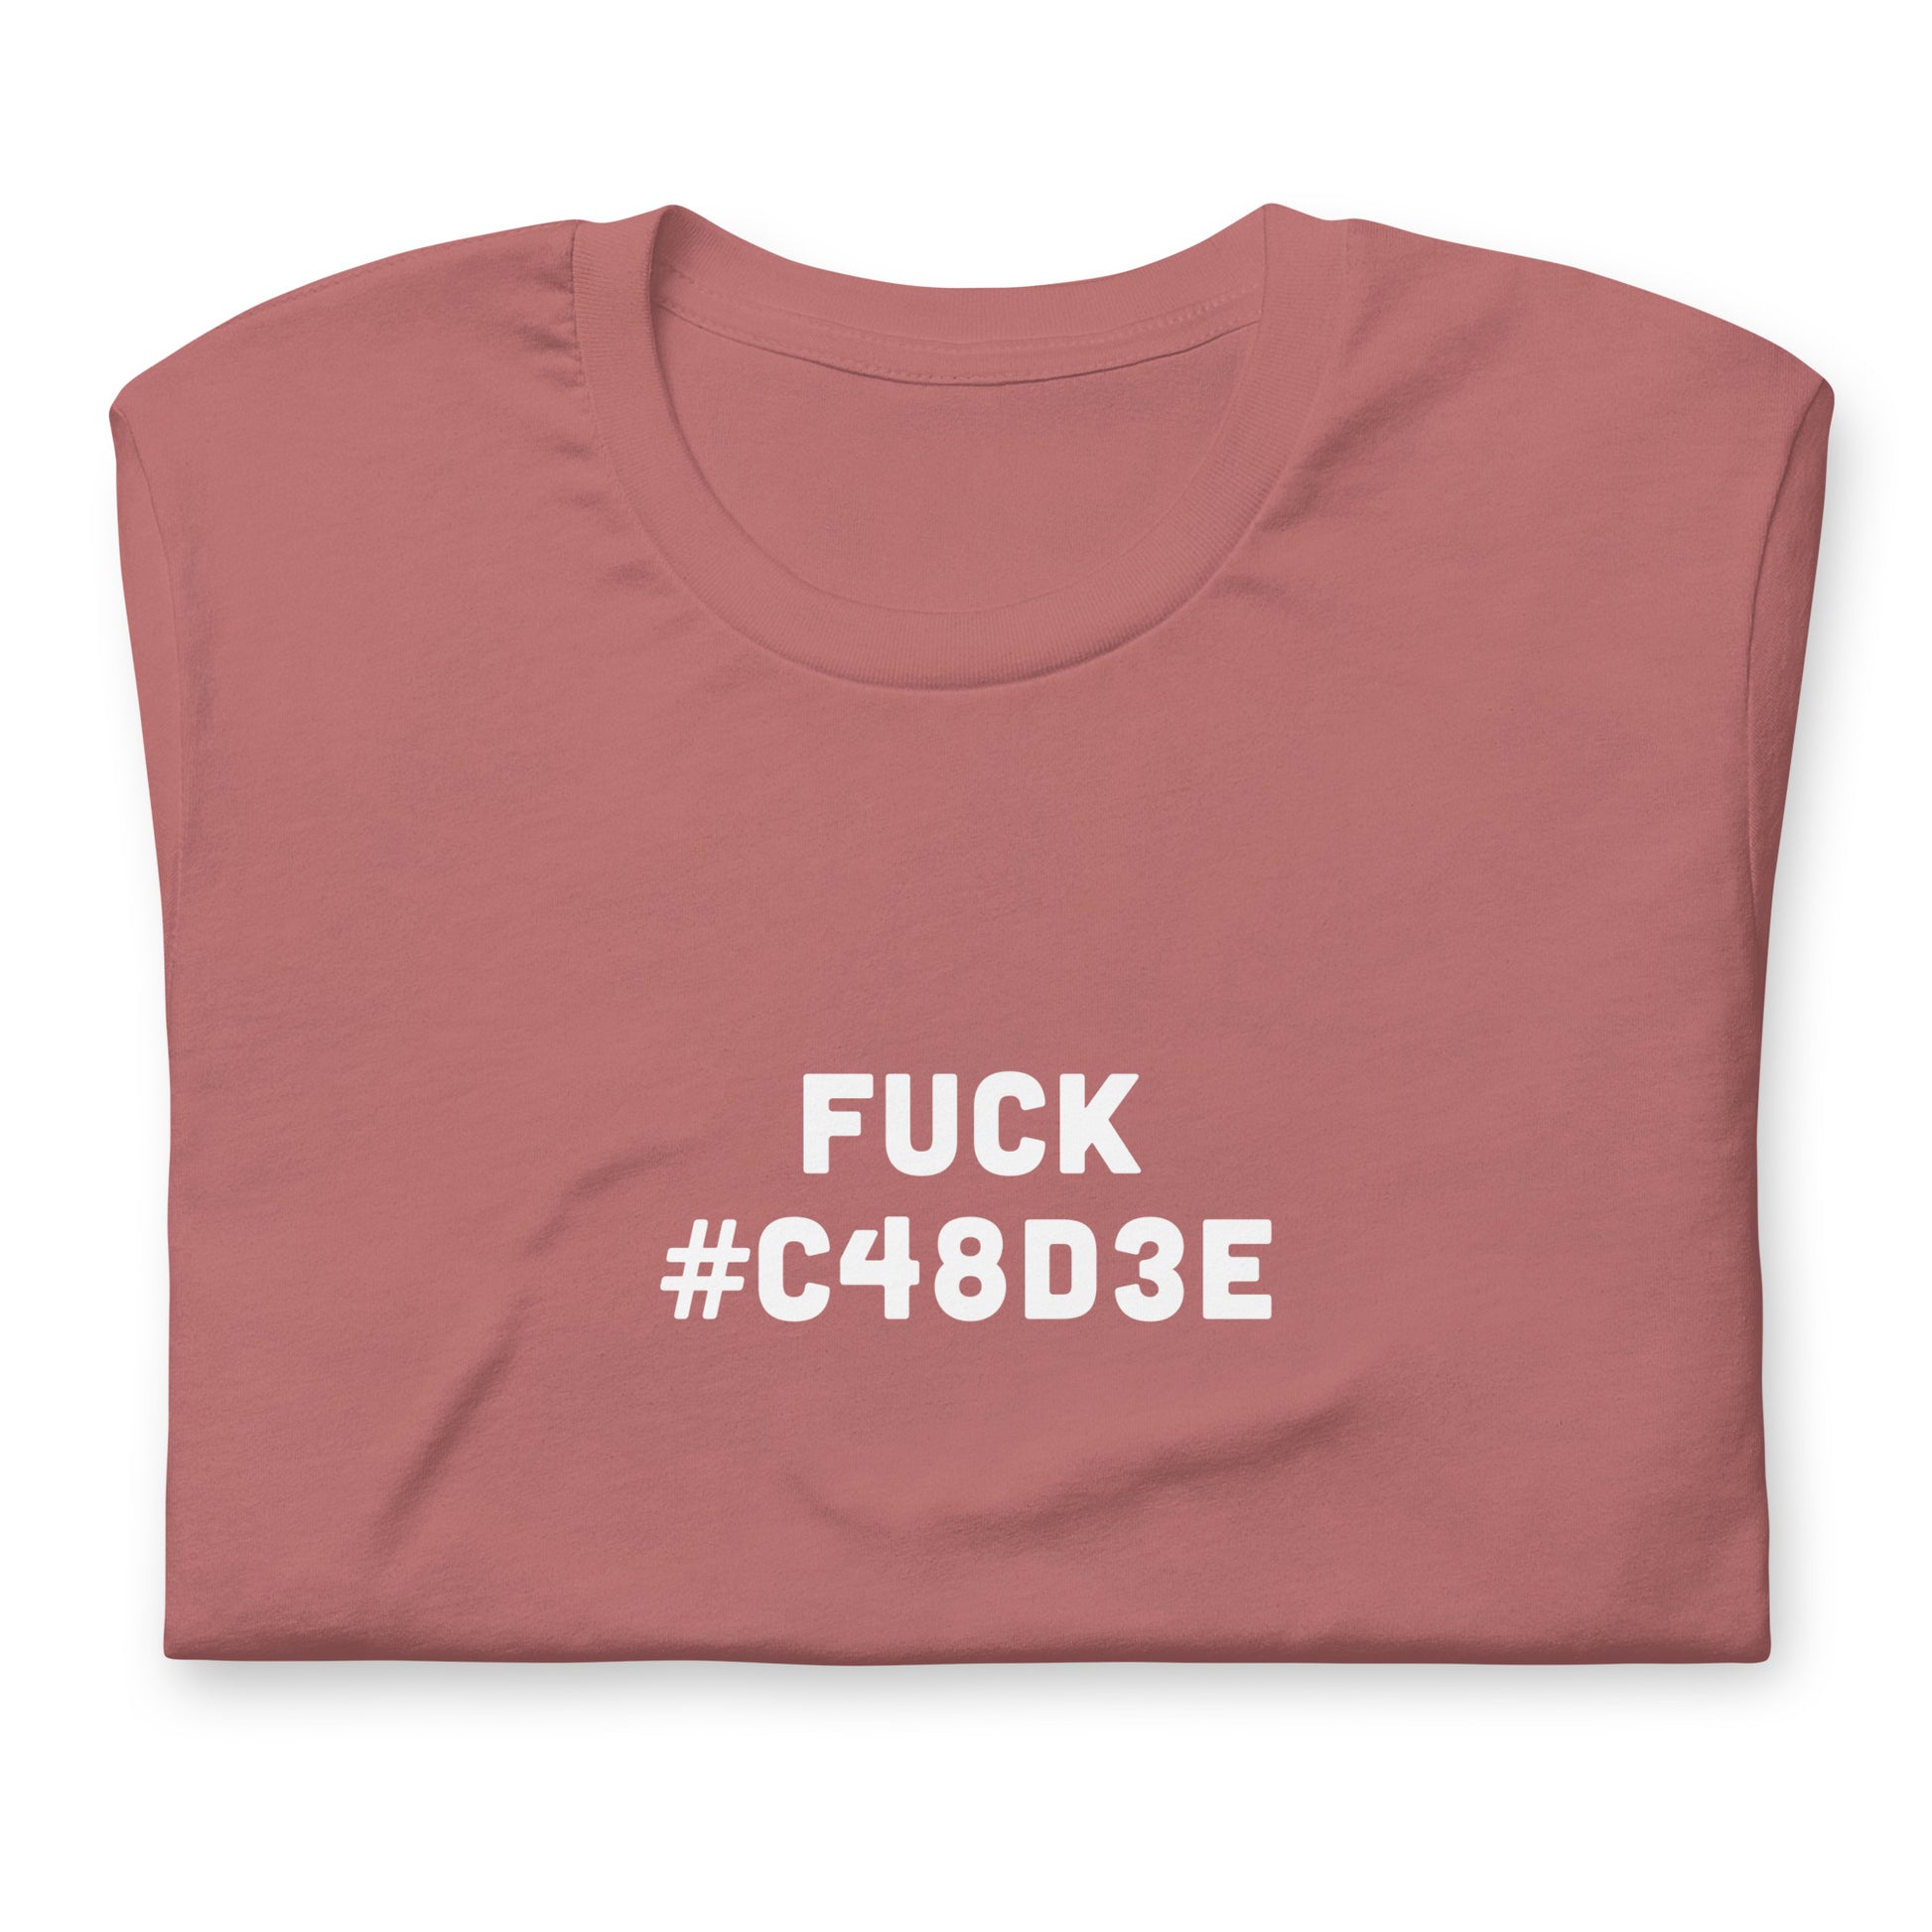 Fuck Hex T-Shirt Size 2XL Color Navy